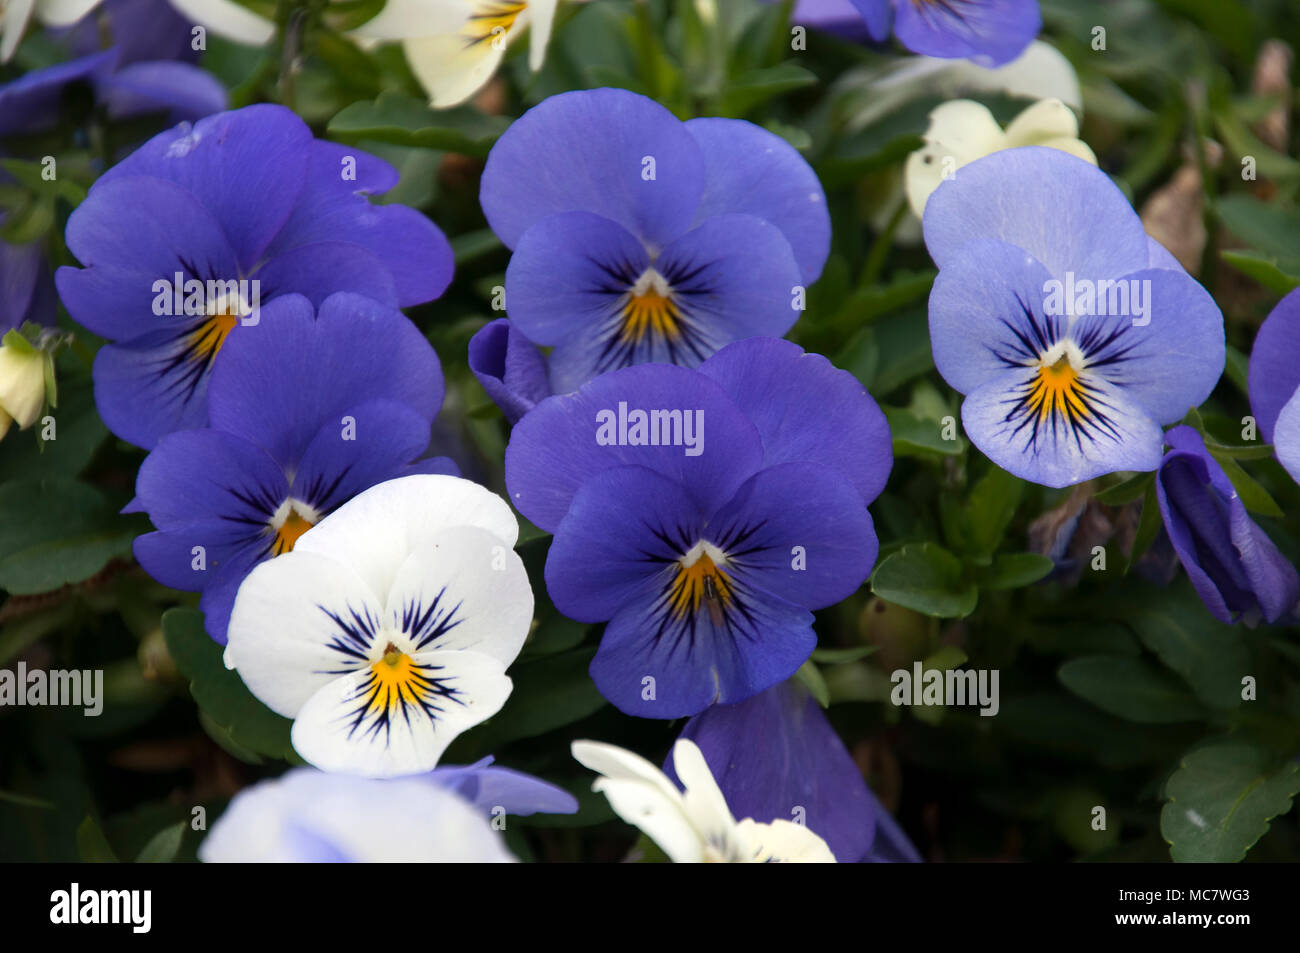 Sydney Australia, purple and white pansies Stock Photo